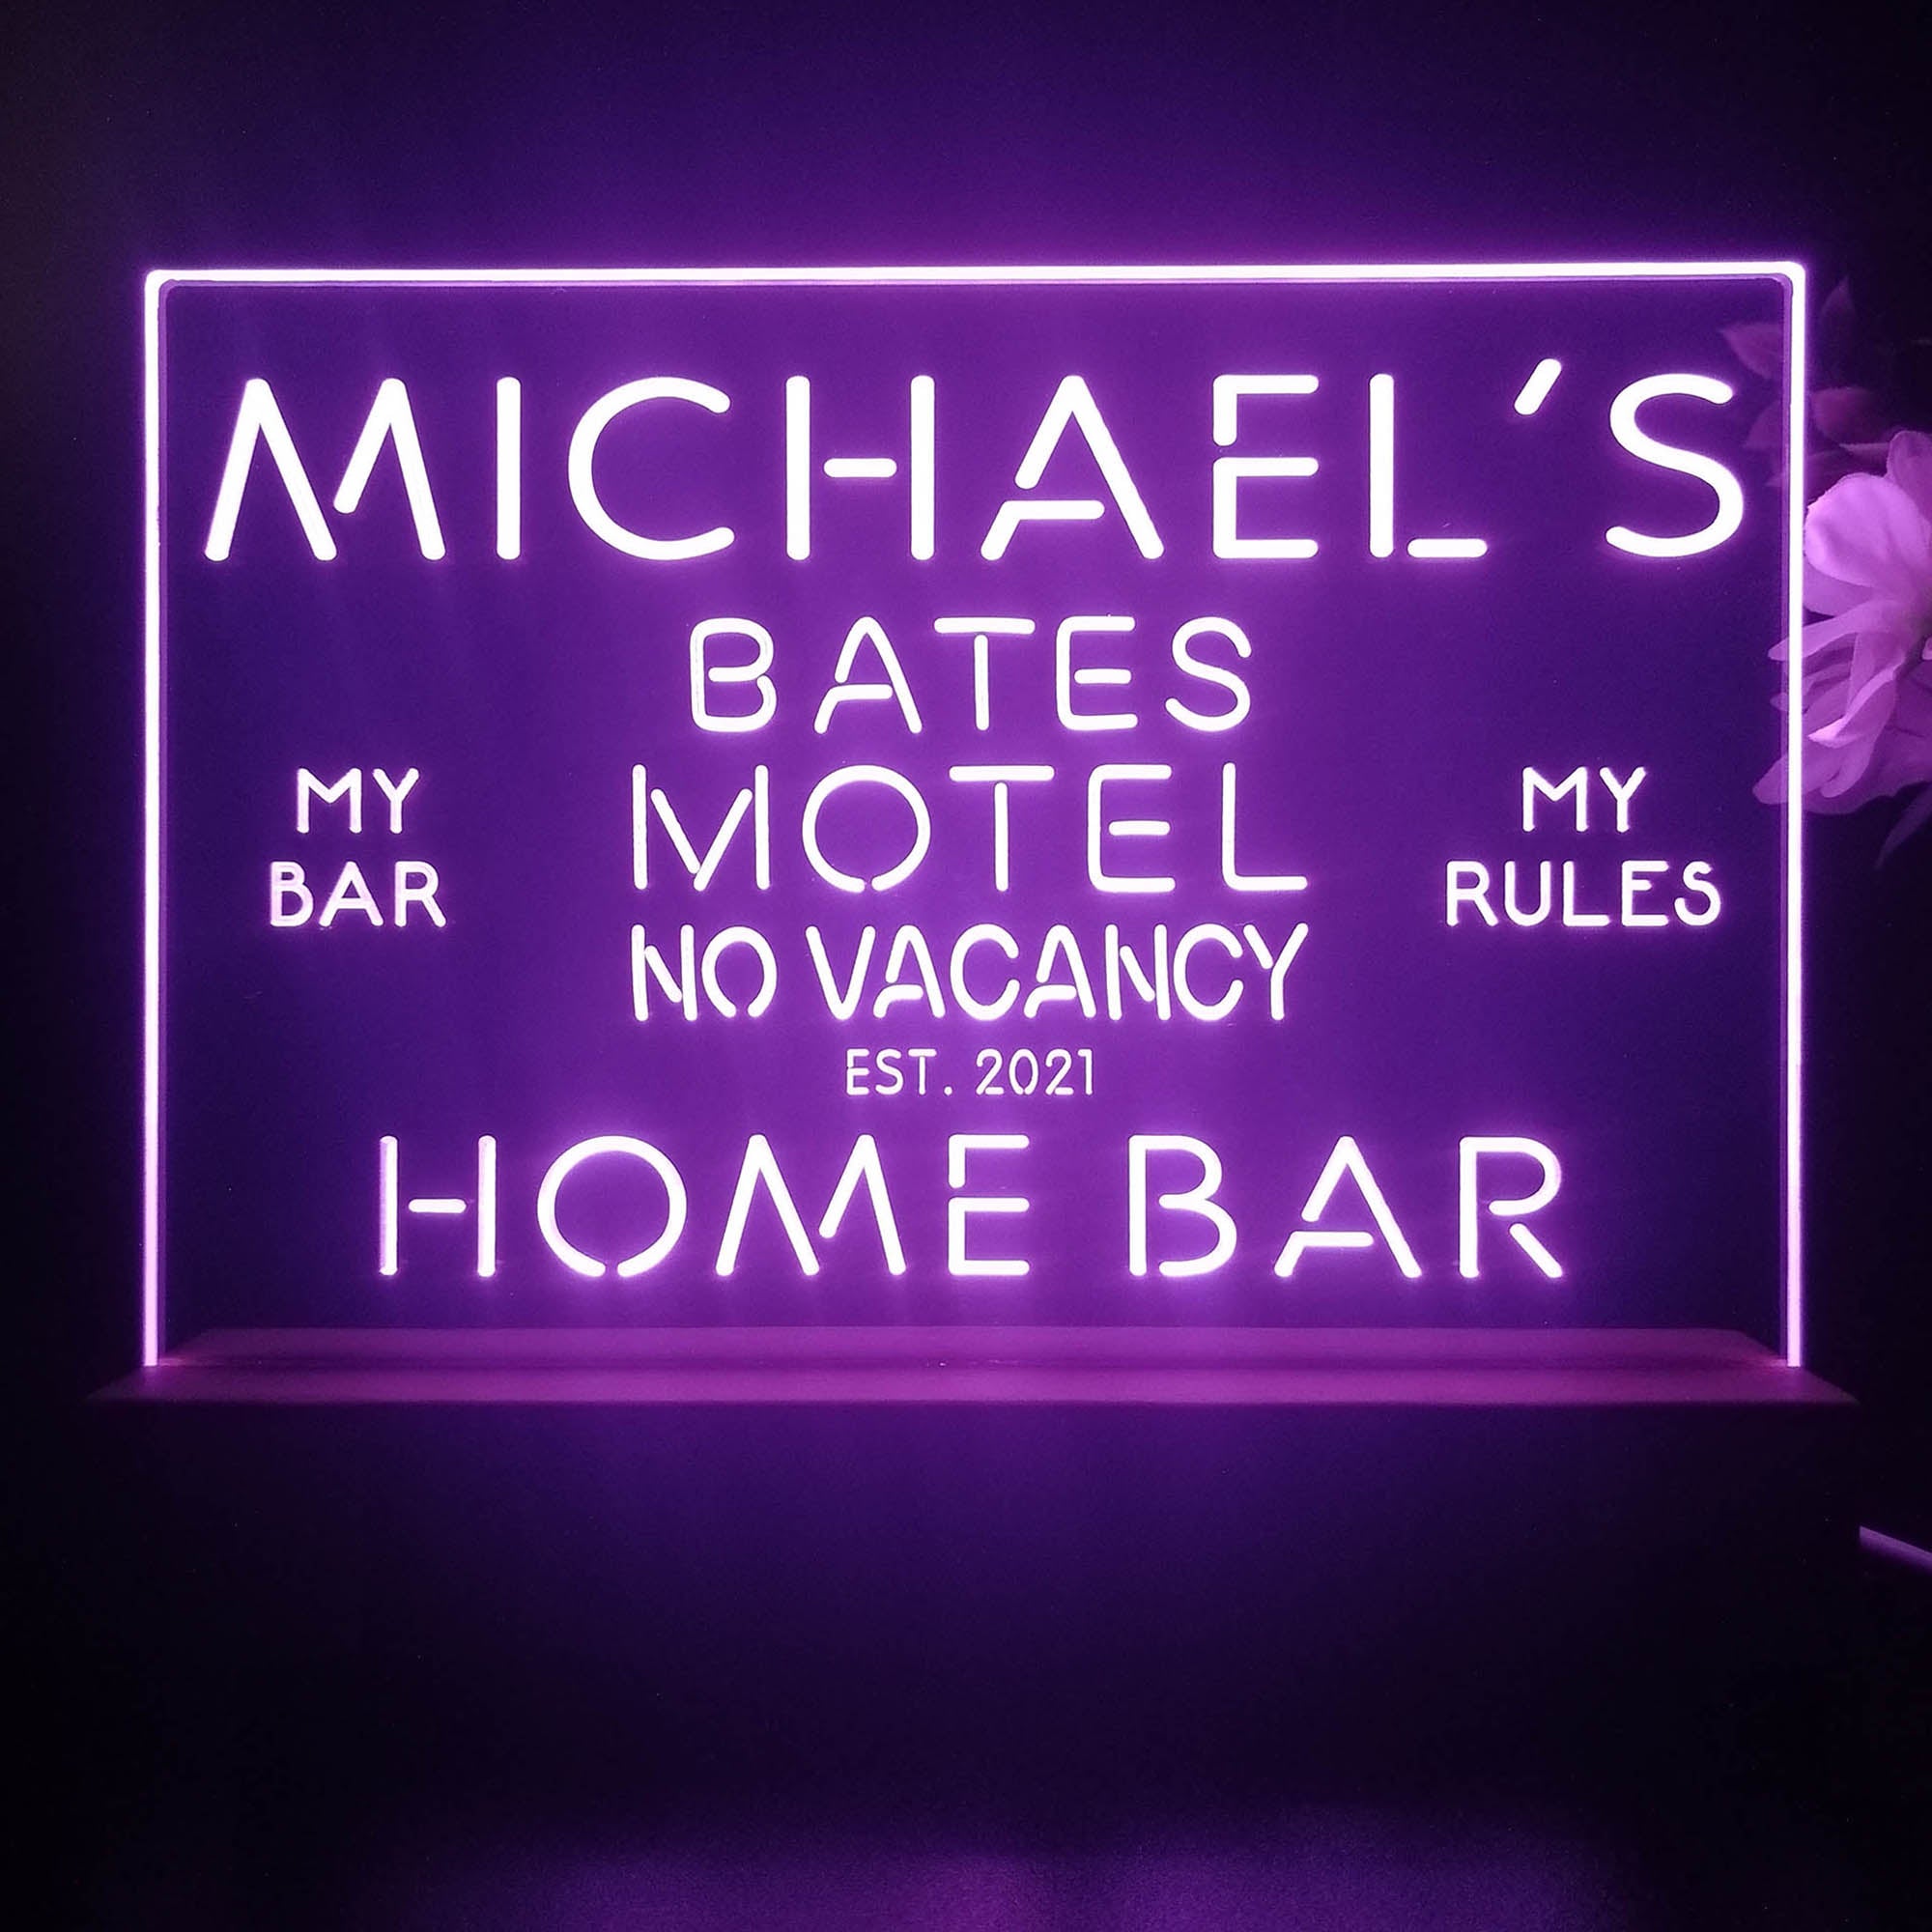 Personalized Bates Motel,No Vacancy Souvenir Neon LED Night Light Sign